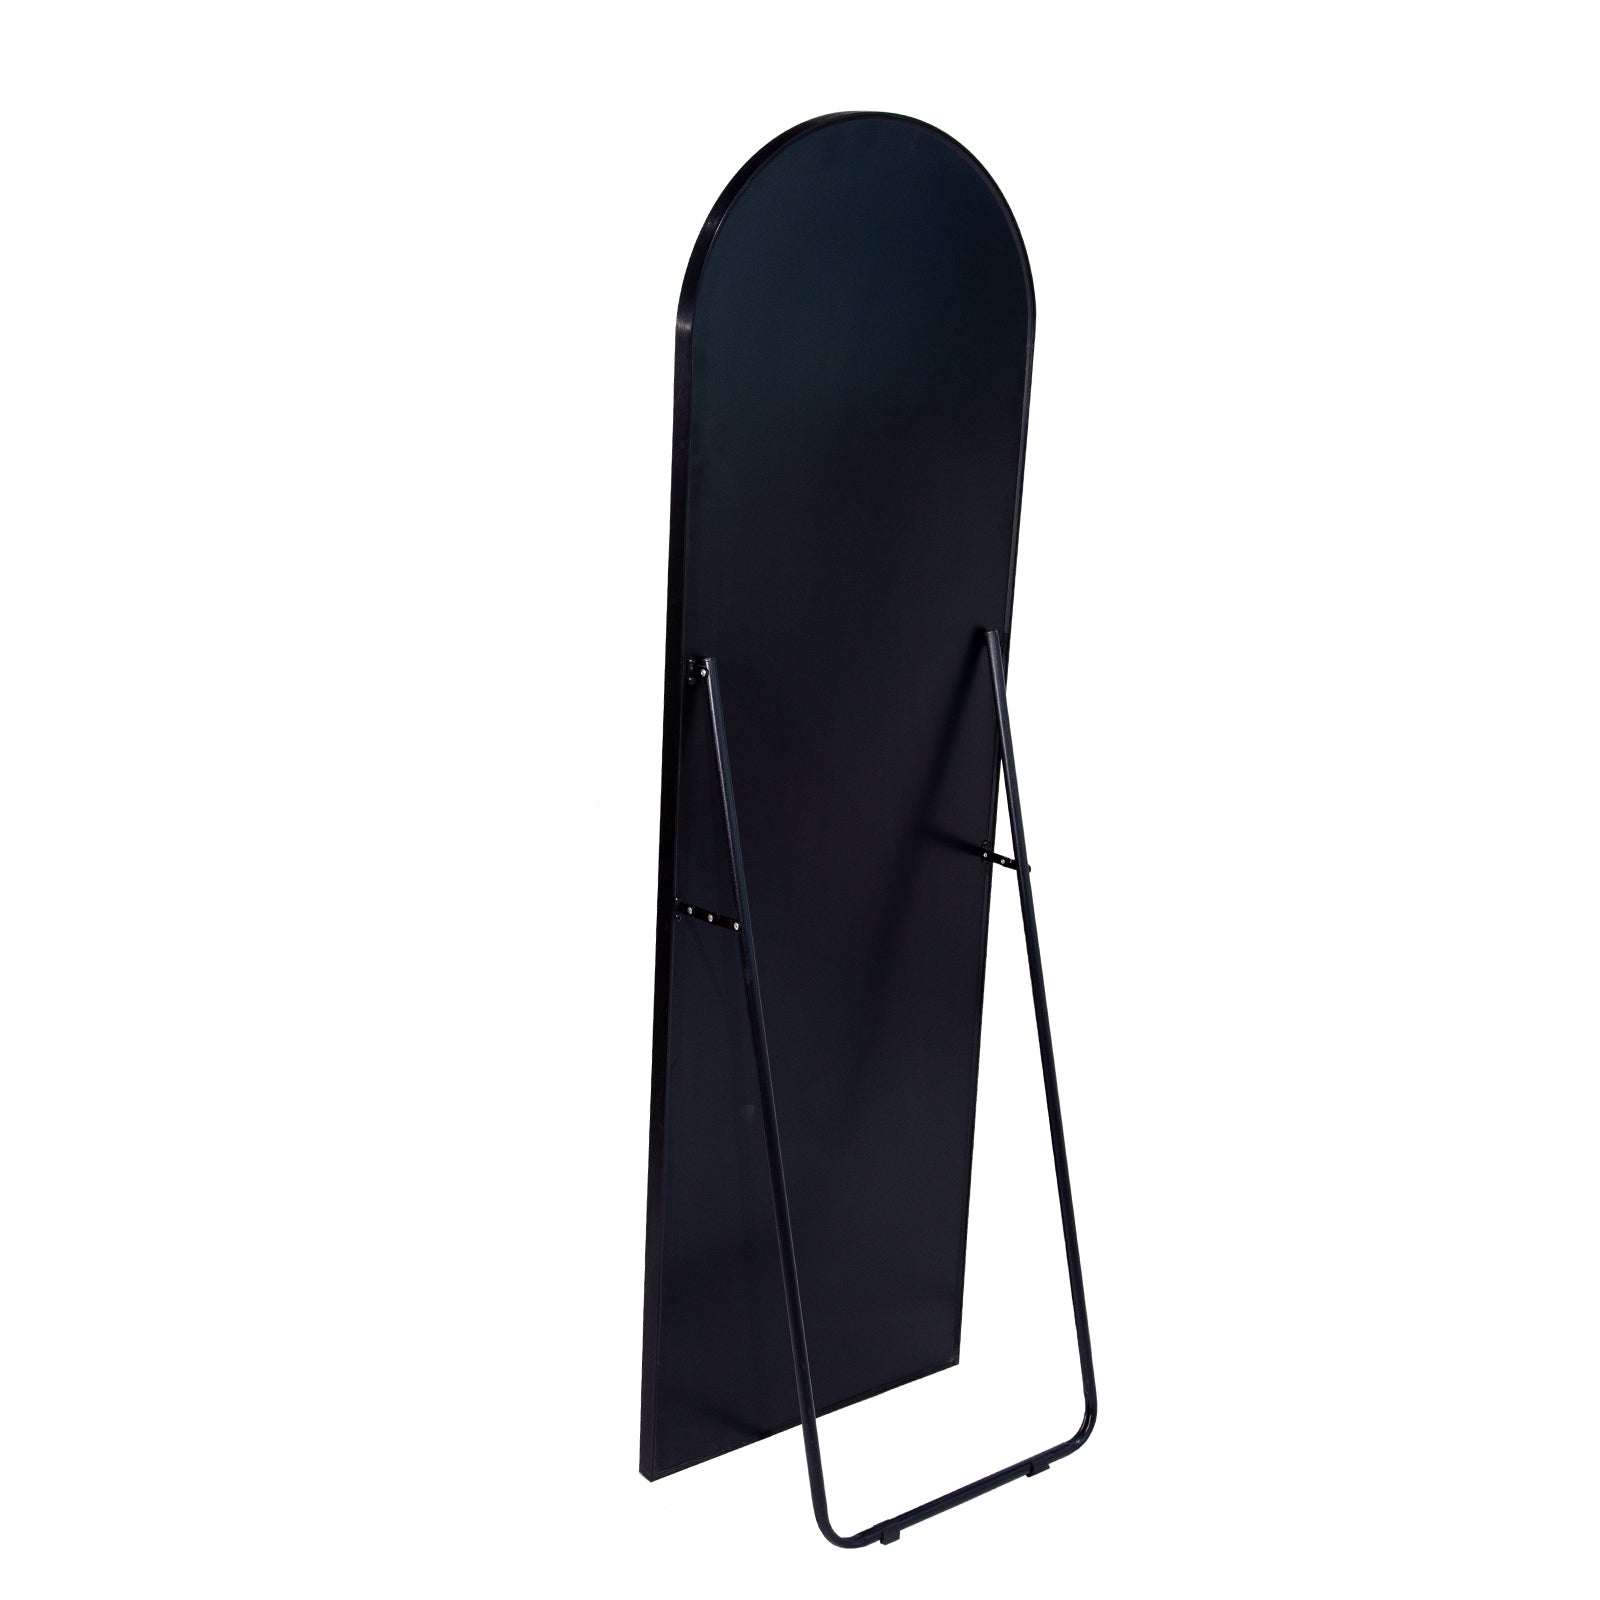 Black 71x27.5 inch metal arch stand full length mirror black-classic-mdf+glass-aluminium alloy